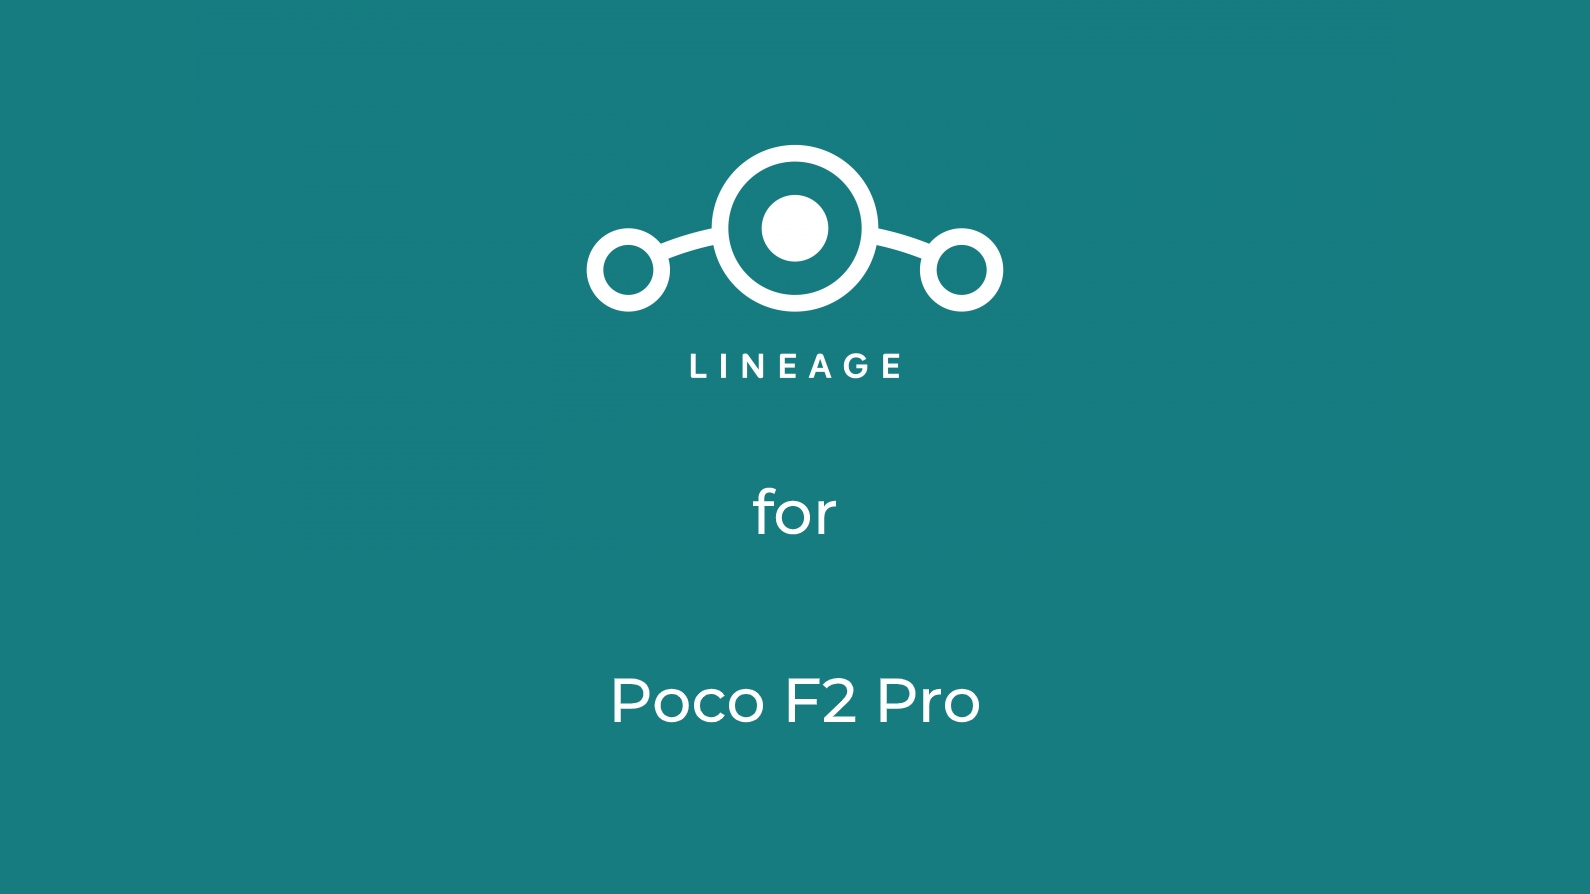 Download LineageOS 17.1 for Poco F2 Pro